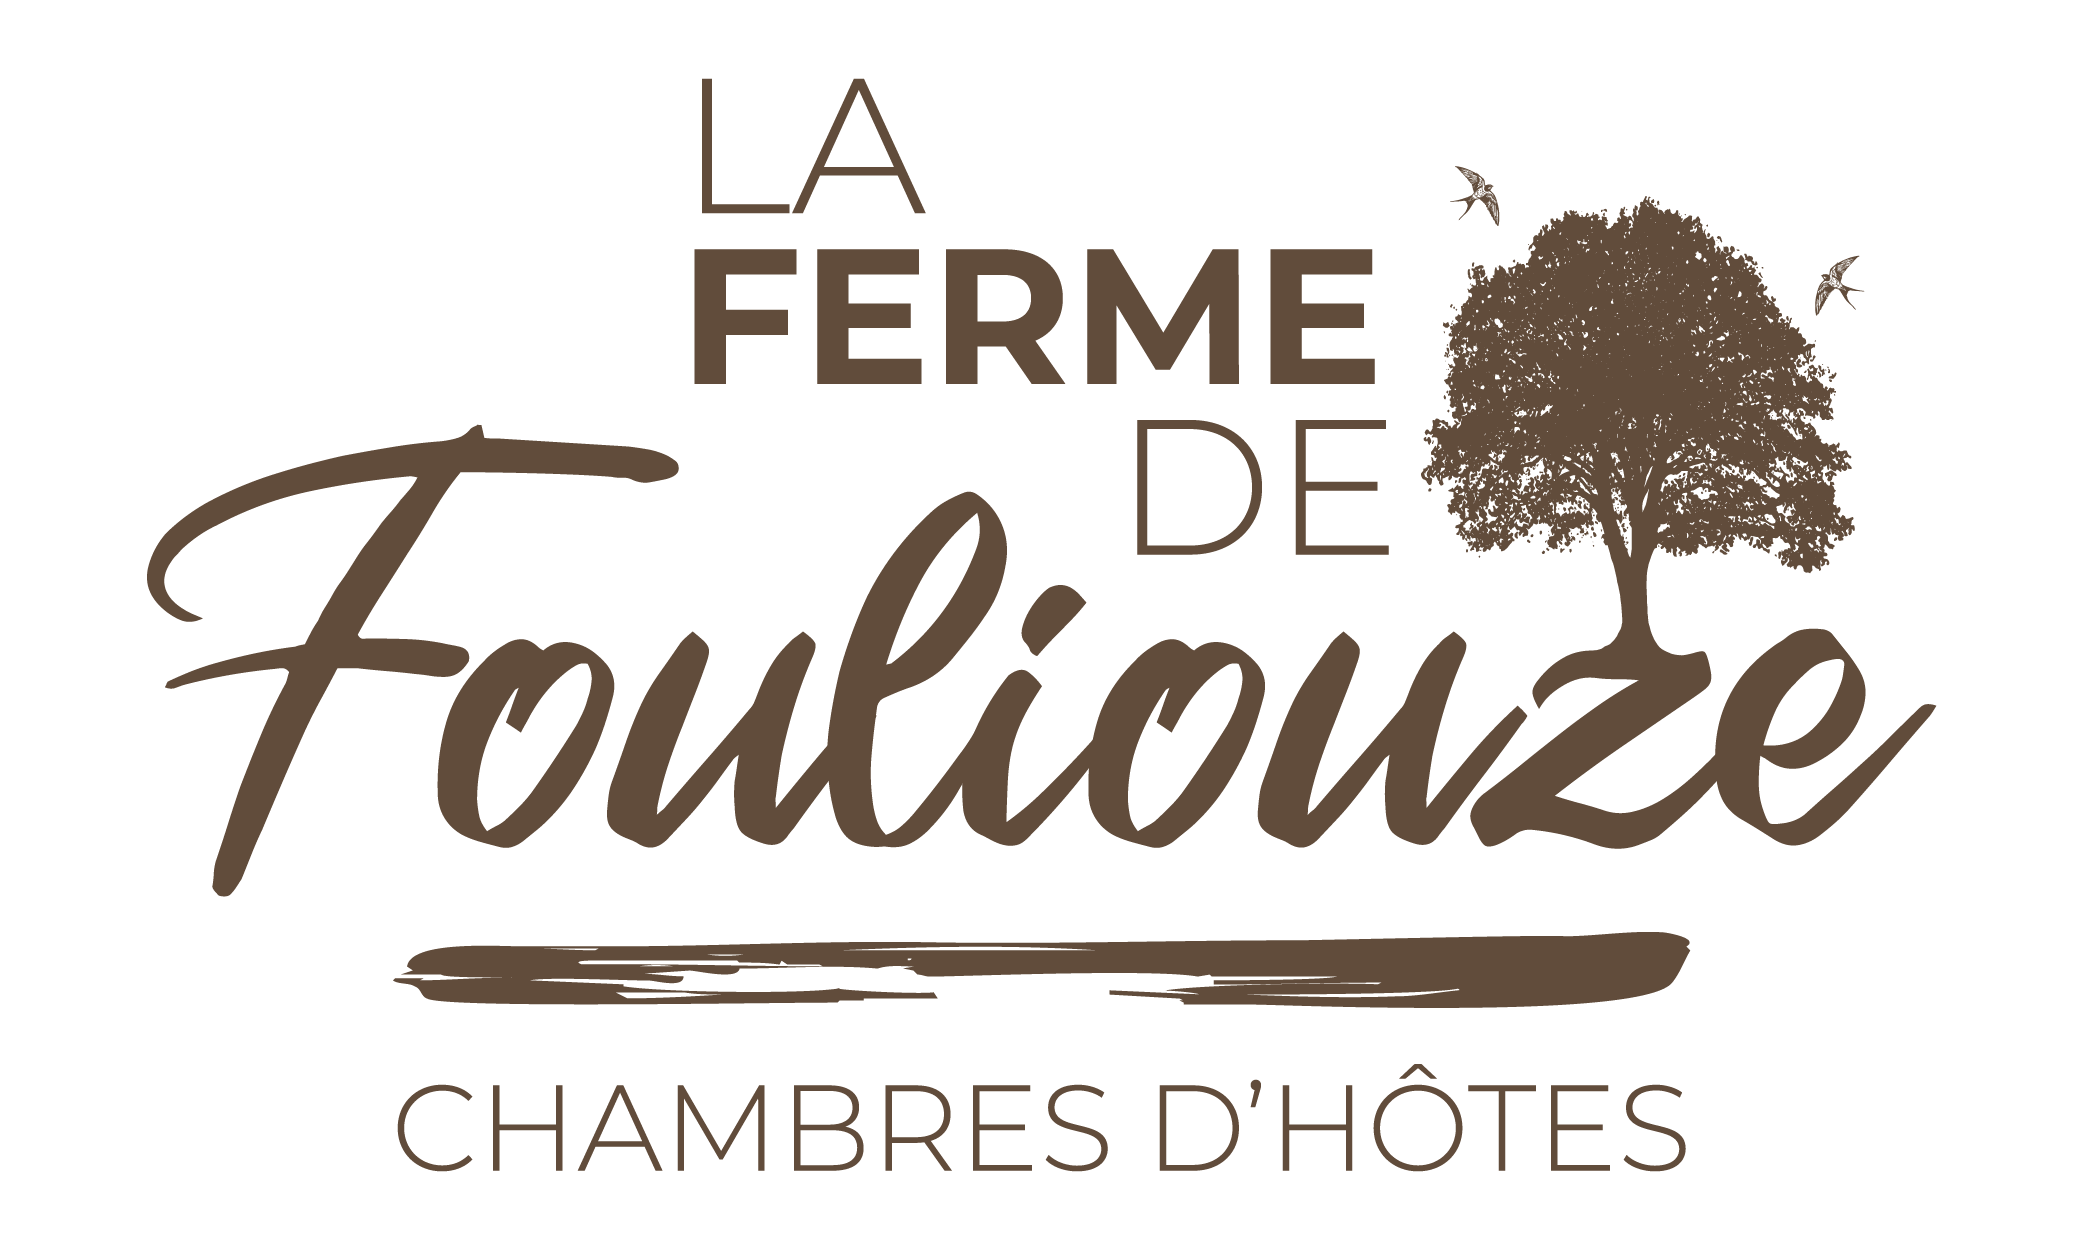 Logo La Ferme de Fouliouze 24510 PEZULS